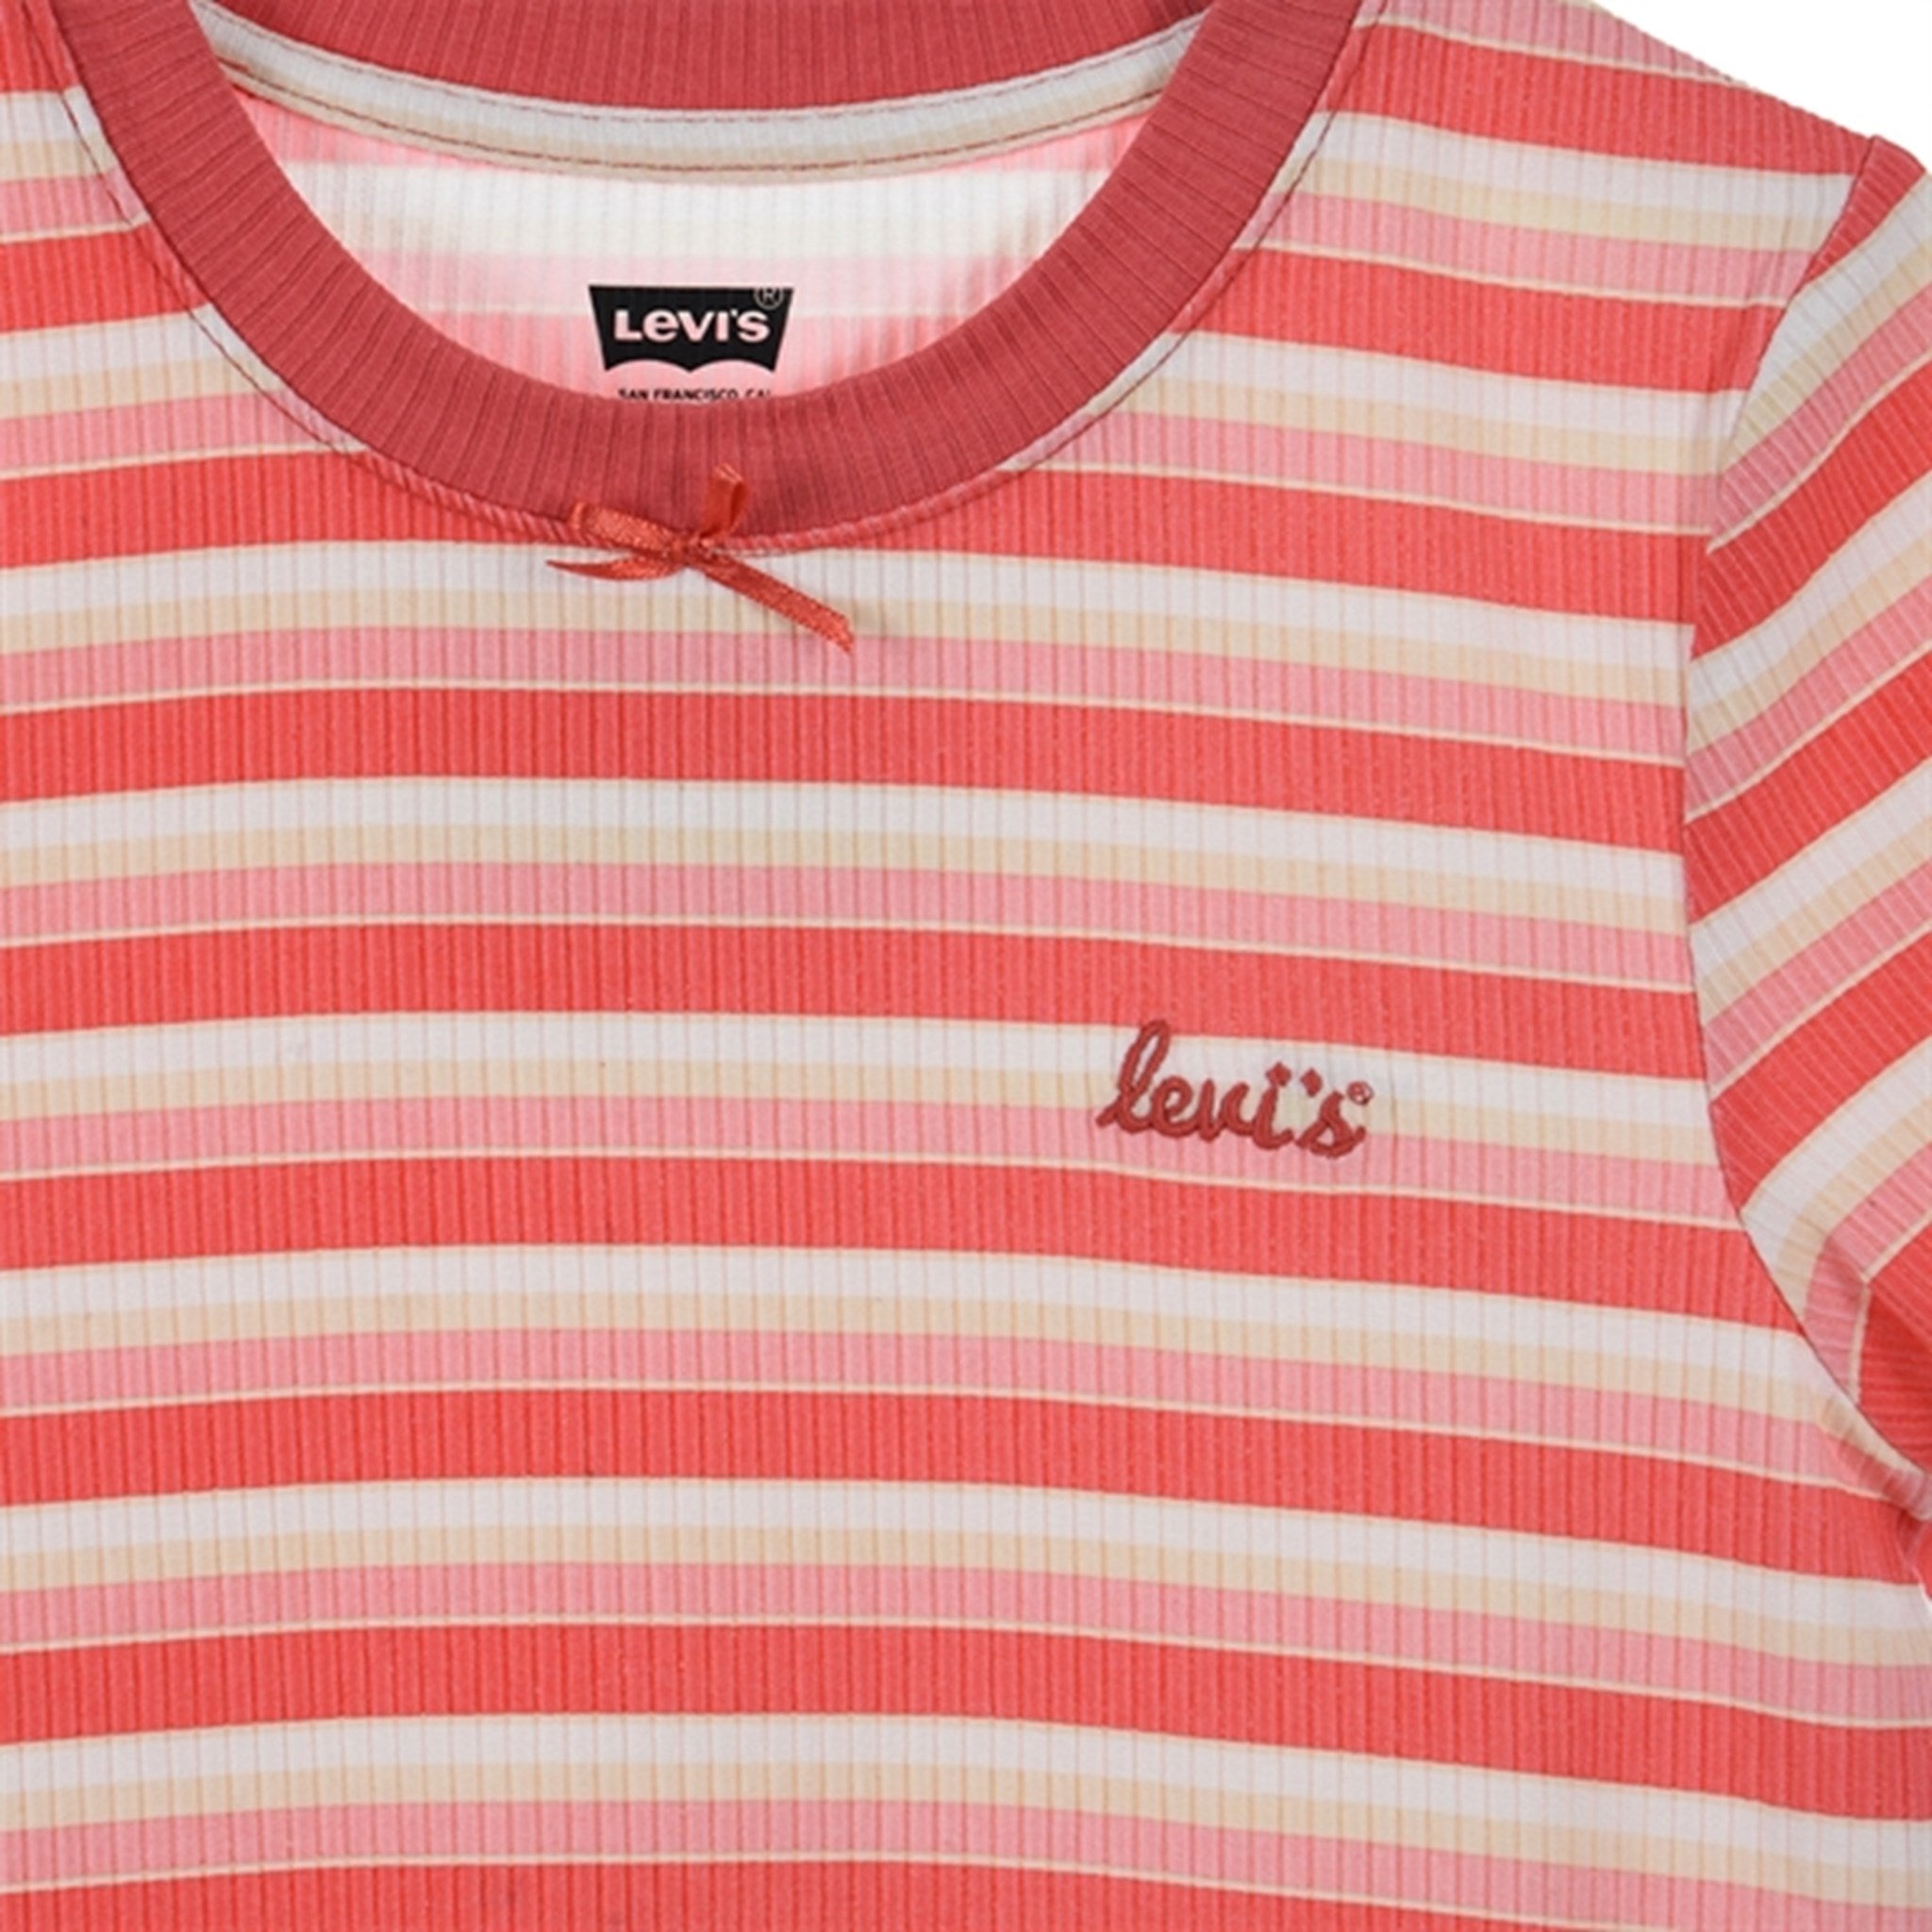 Levi's Striped Meet and Greet T-shirt Pink 2